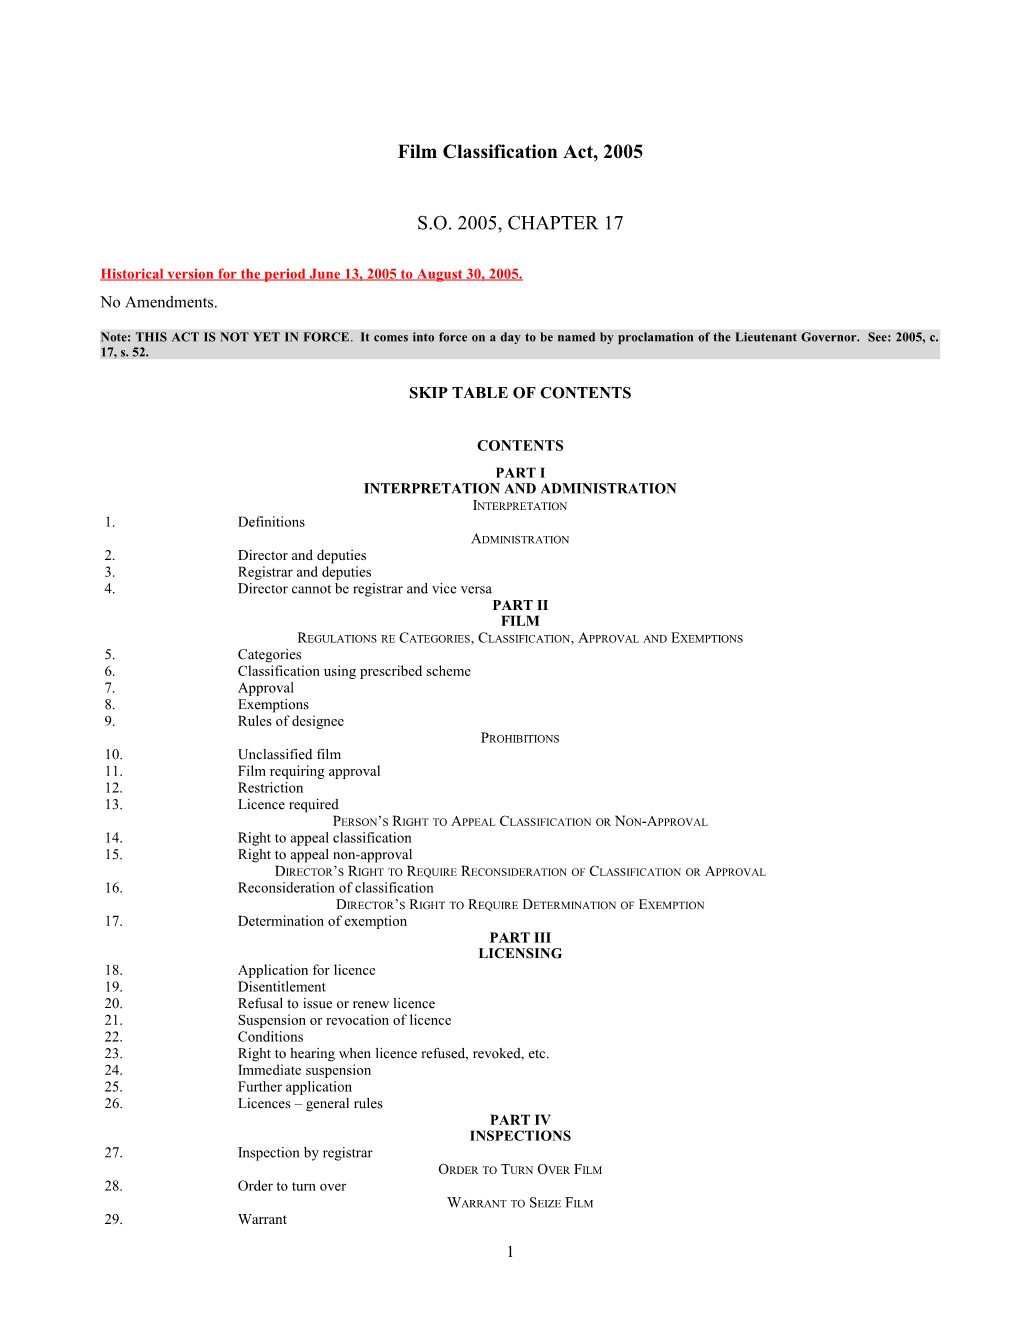 Film Classification Act, 2005, S.O. 2005, C. 17